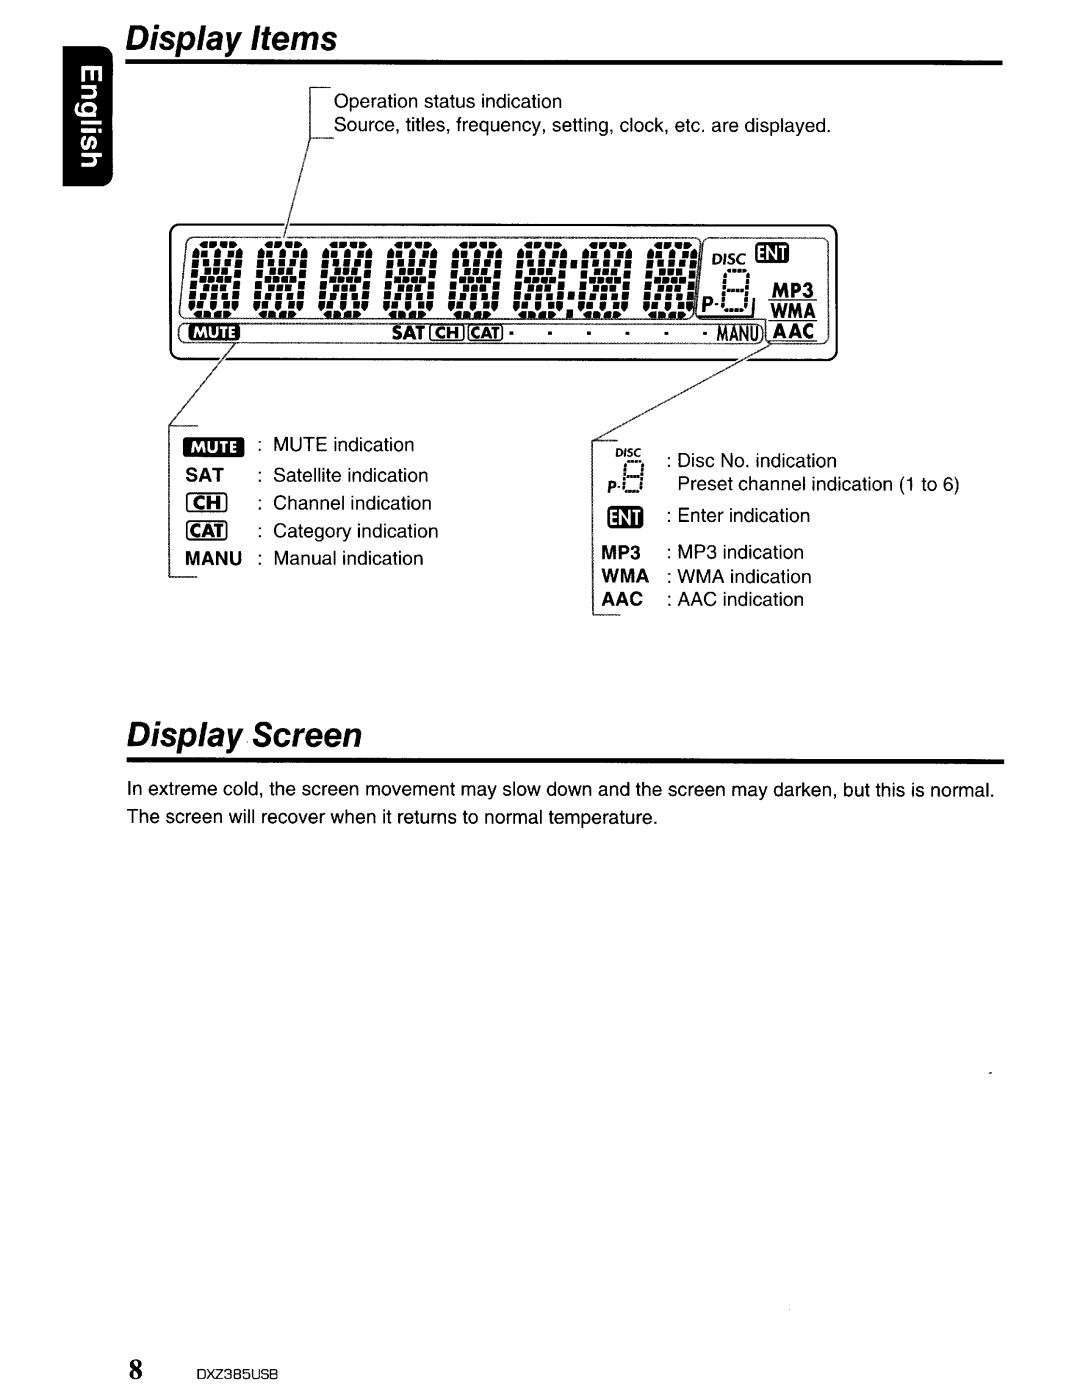 Clarion DXZ385US8 owner manual Display Items, Display Screen, lIn lIn, •••••, • •••, •.•••• 